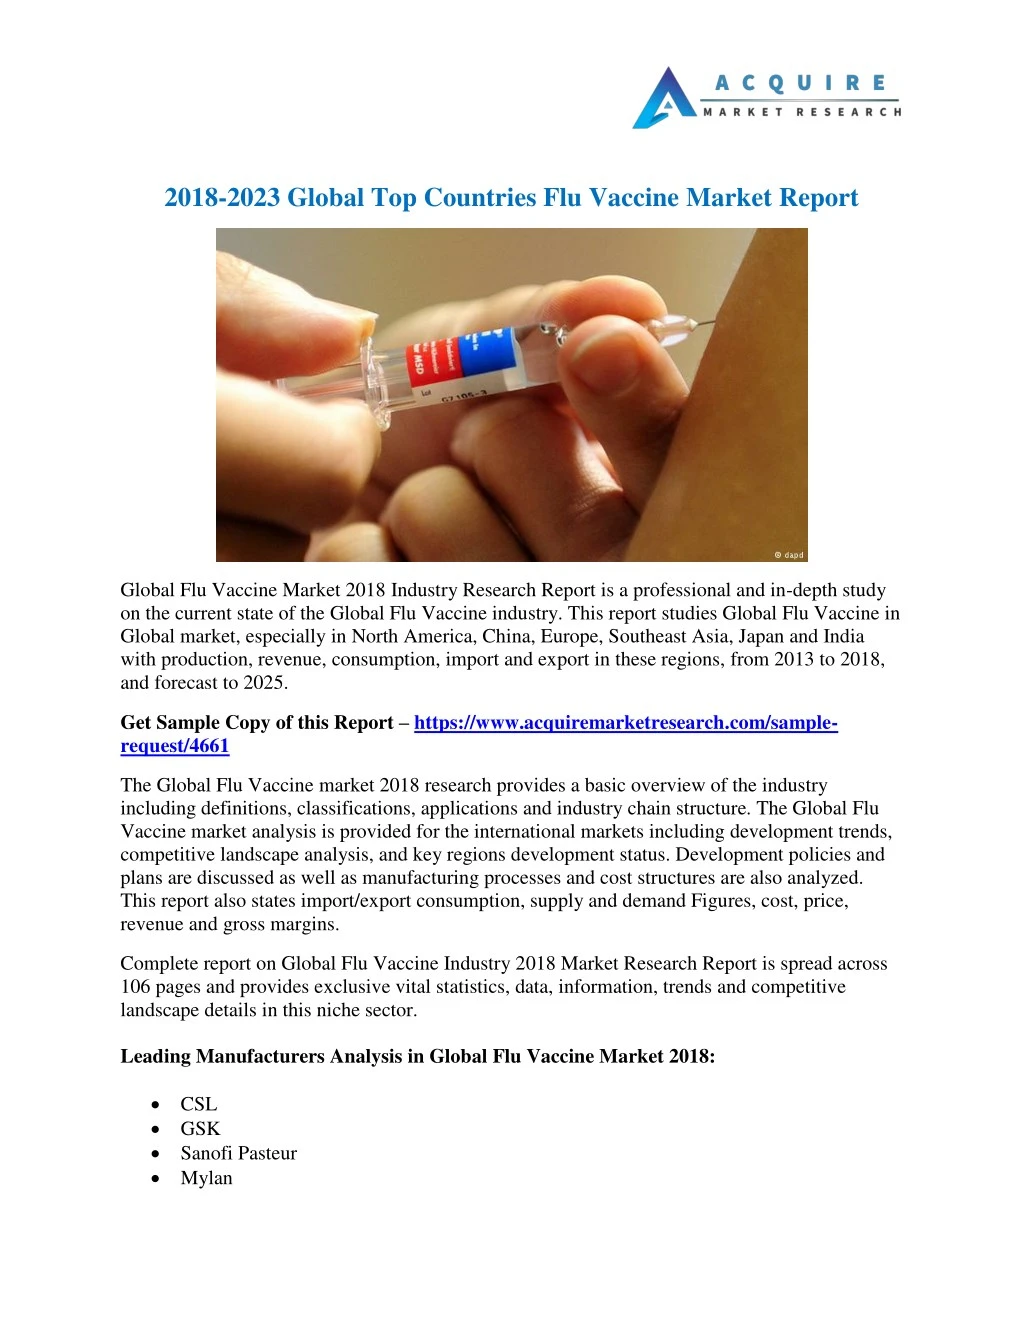 2018 2023 global top countries flu vaccine market